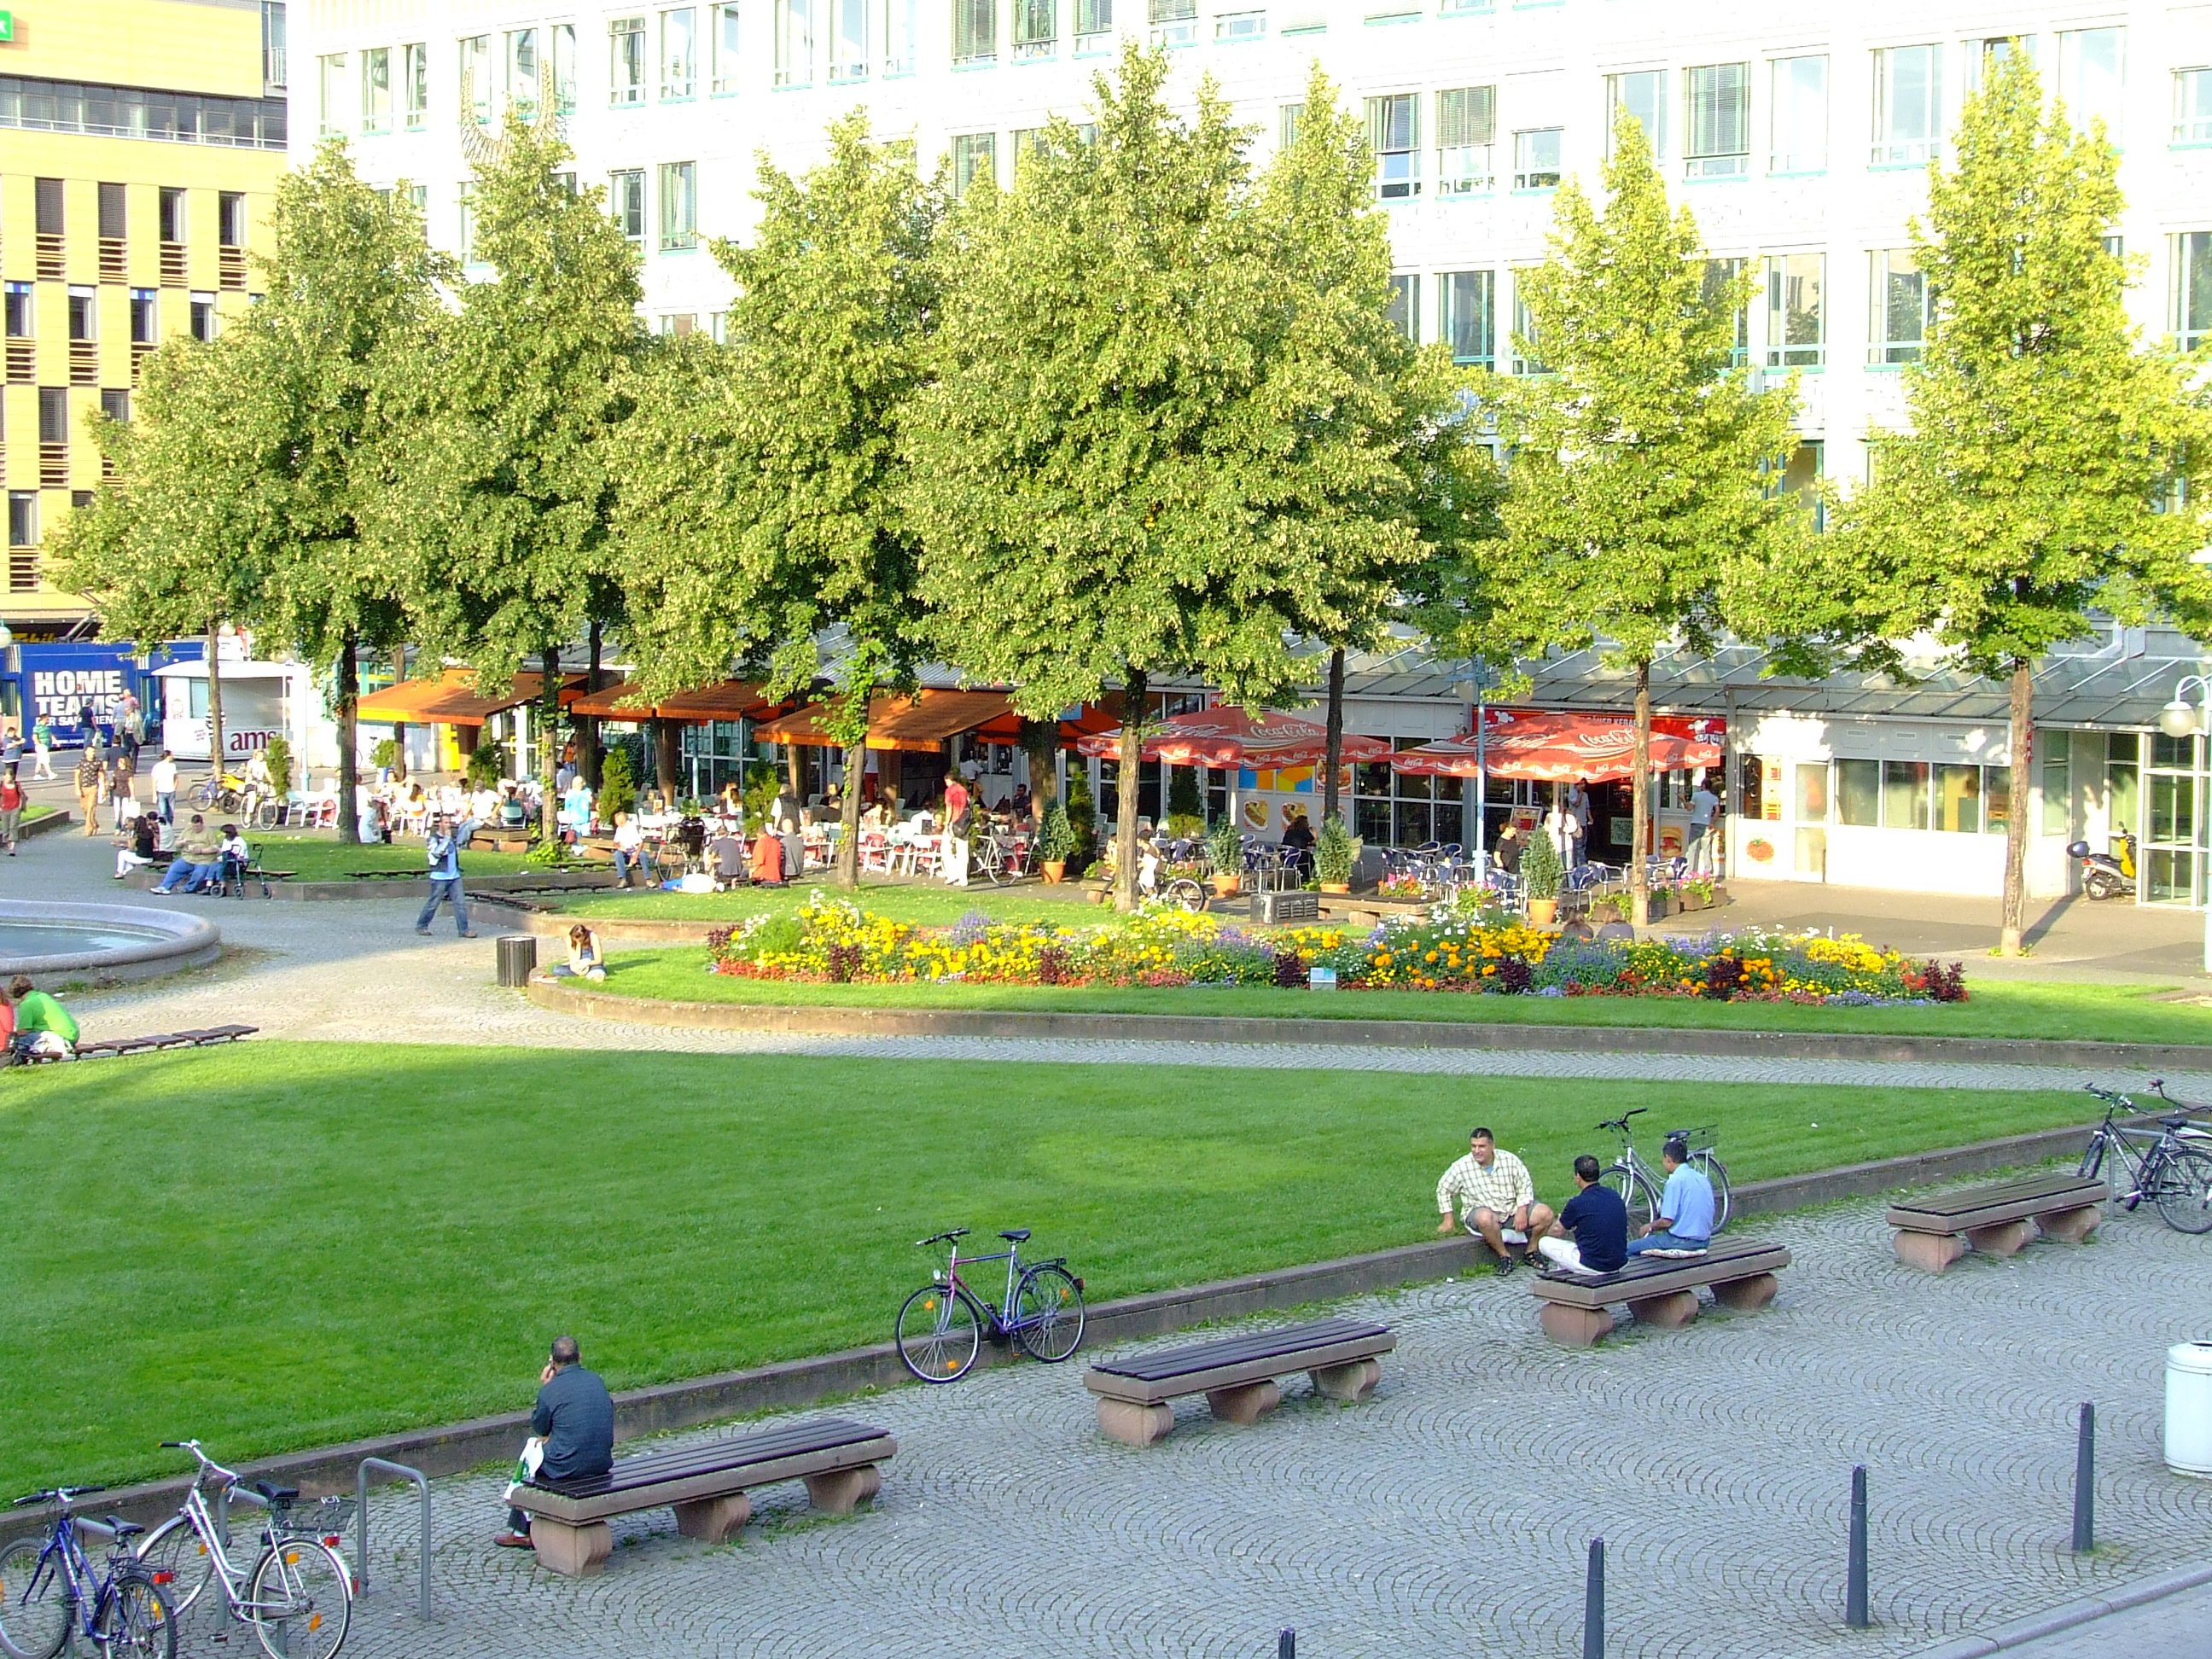 Datei:Mannheim Paradeplatz 1.jpg